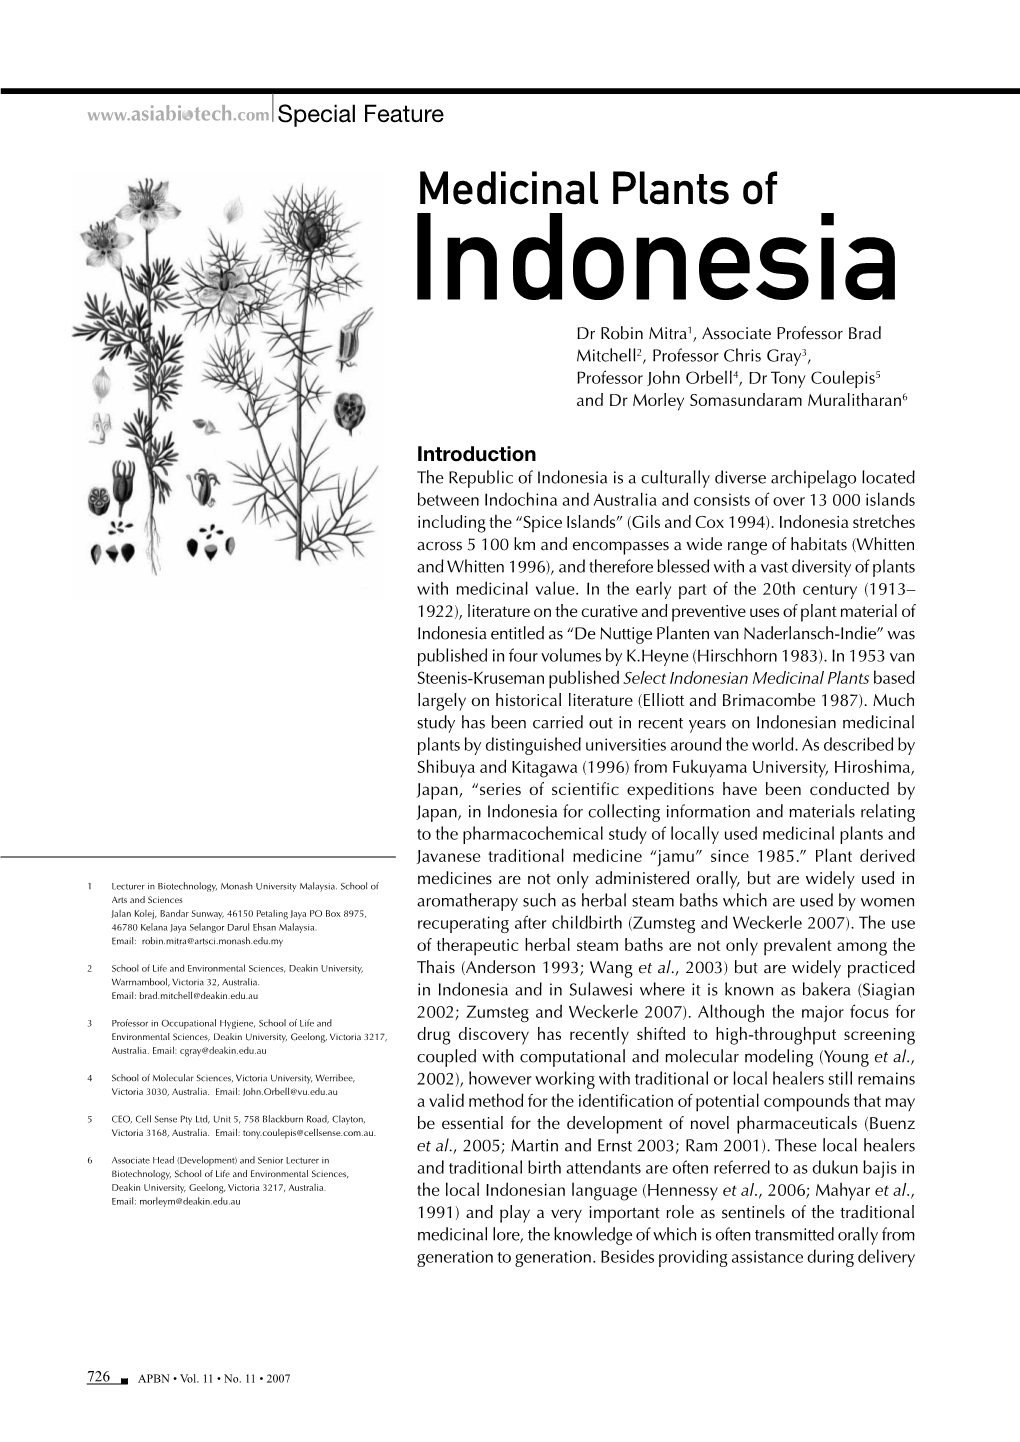 Medicinal Plants of Indonesia